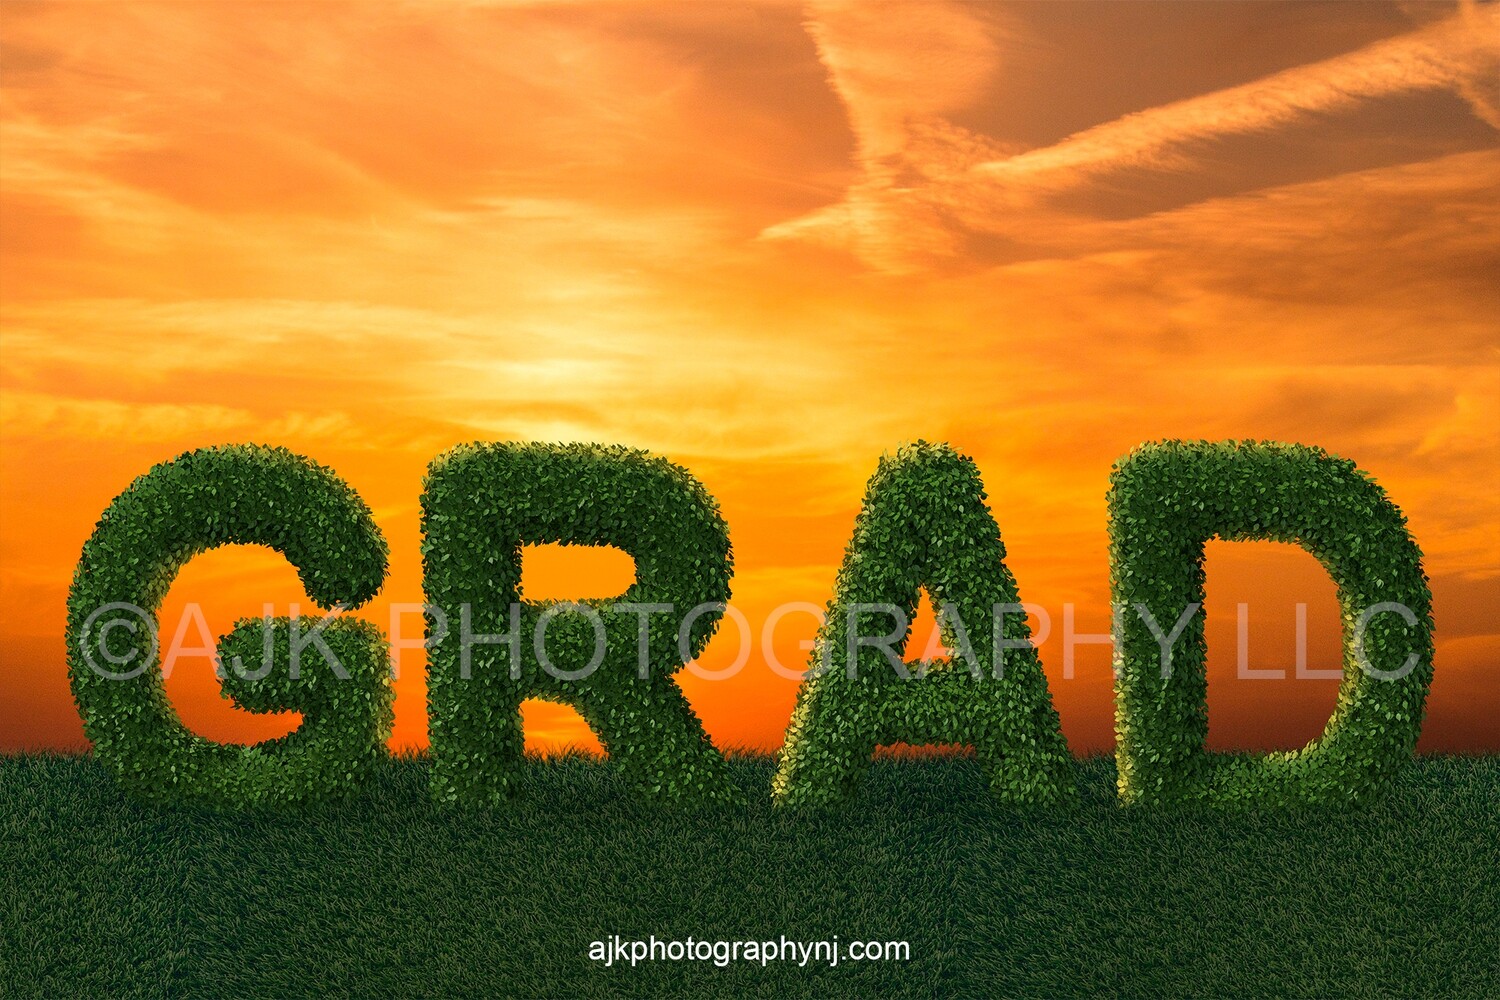 Giant bush letters spelling GRAD in grassy field and golden sky, Graduation digital backdrop